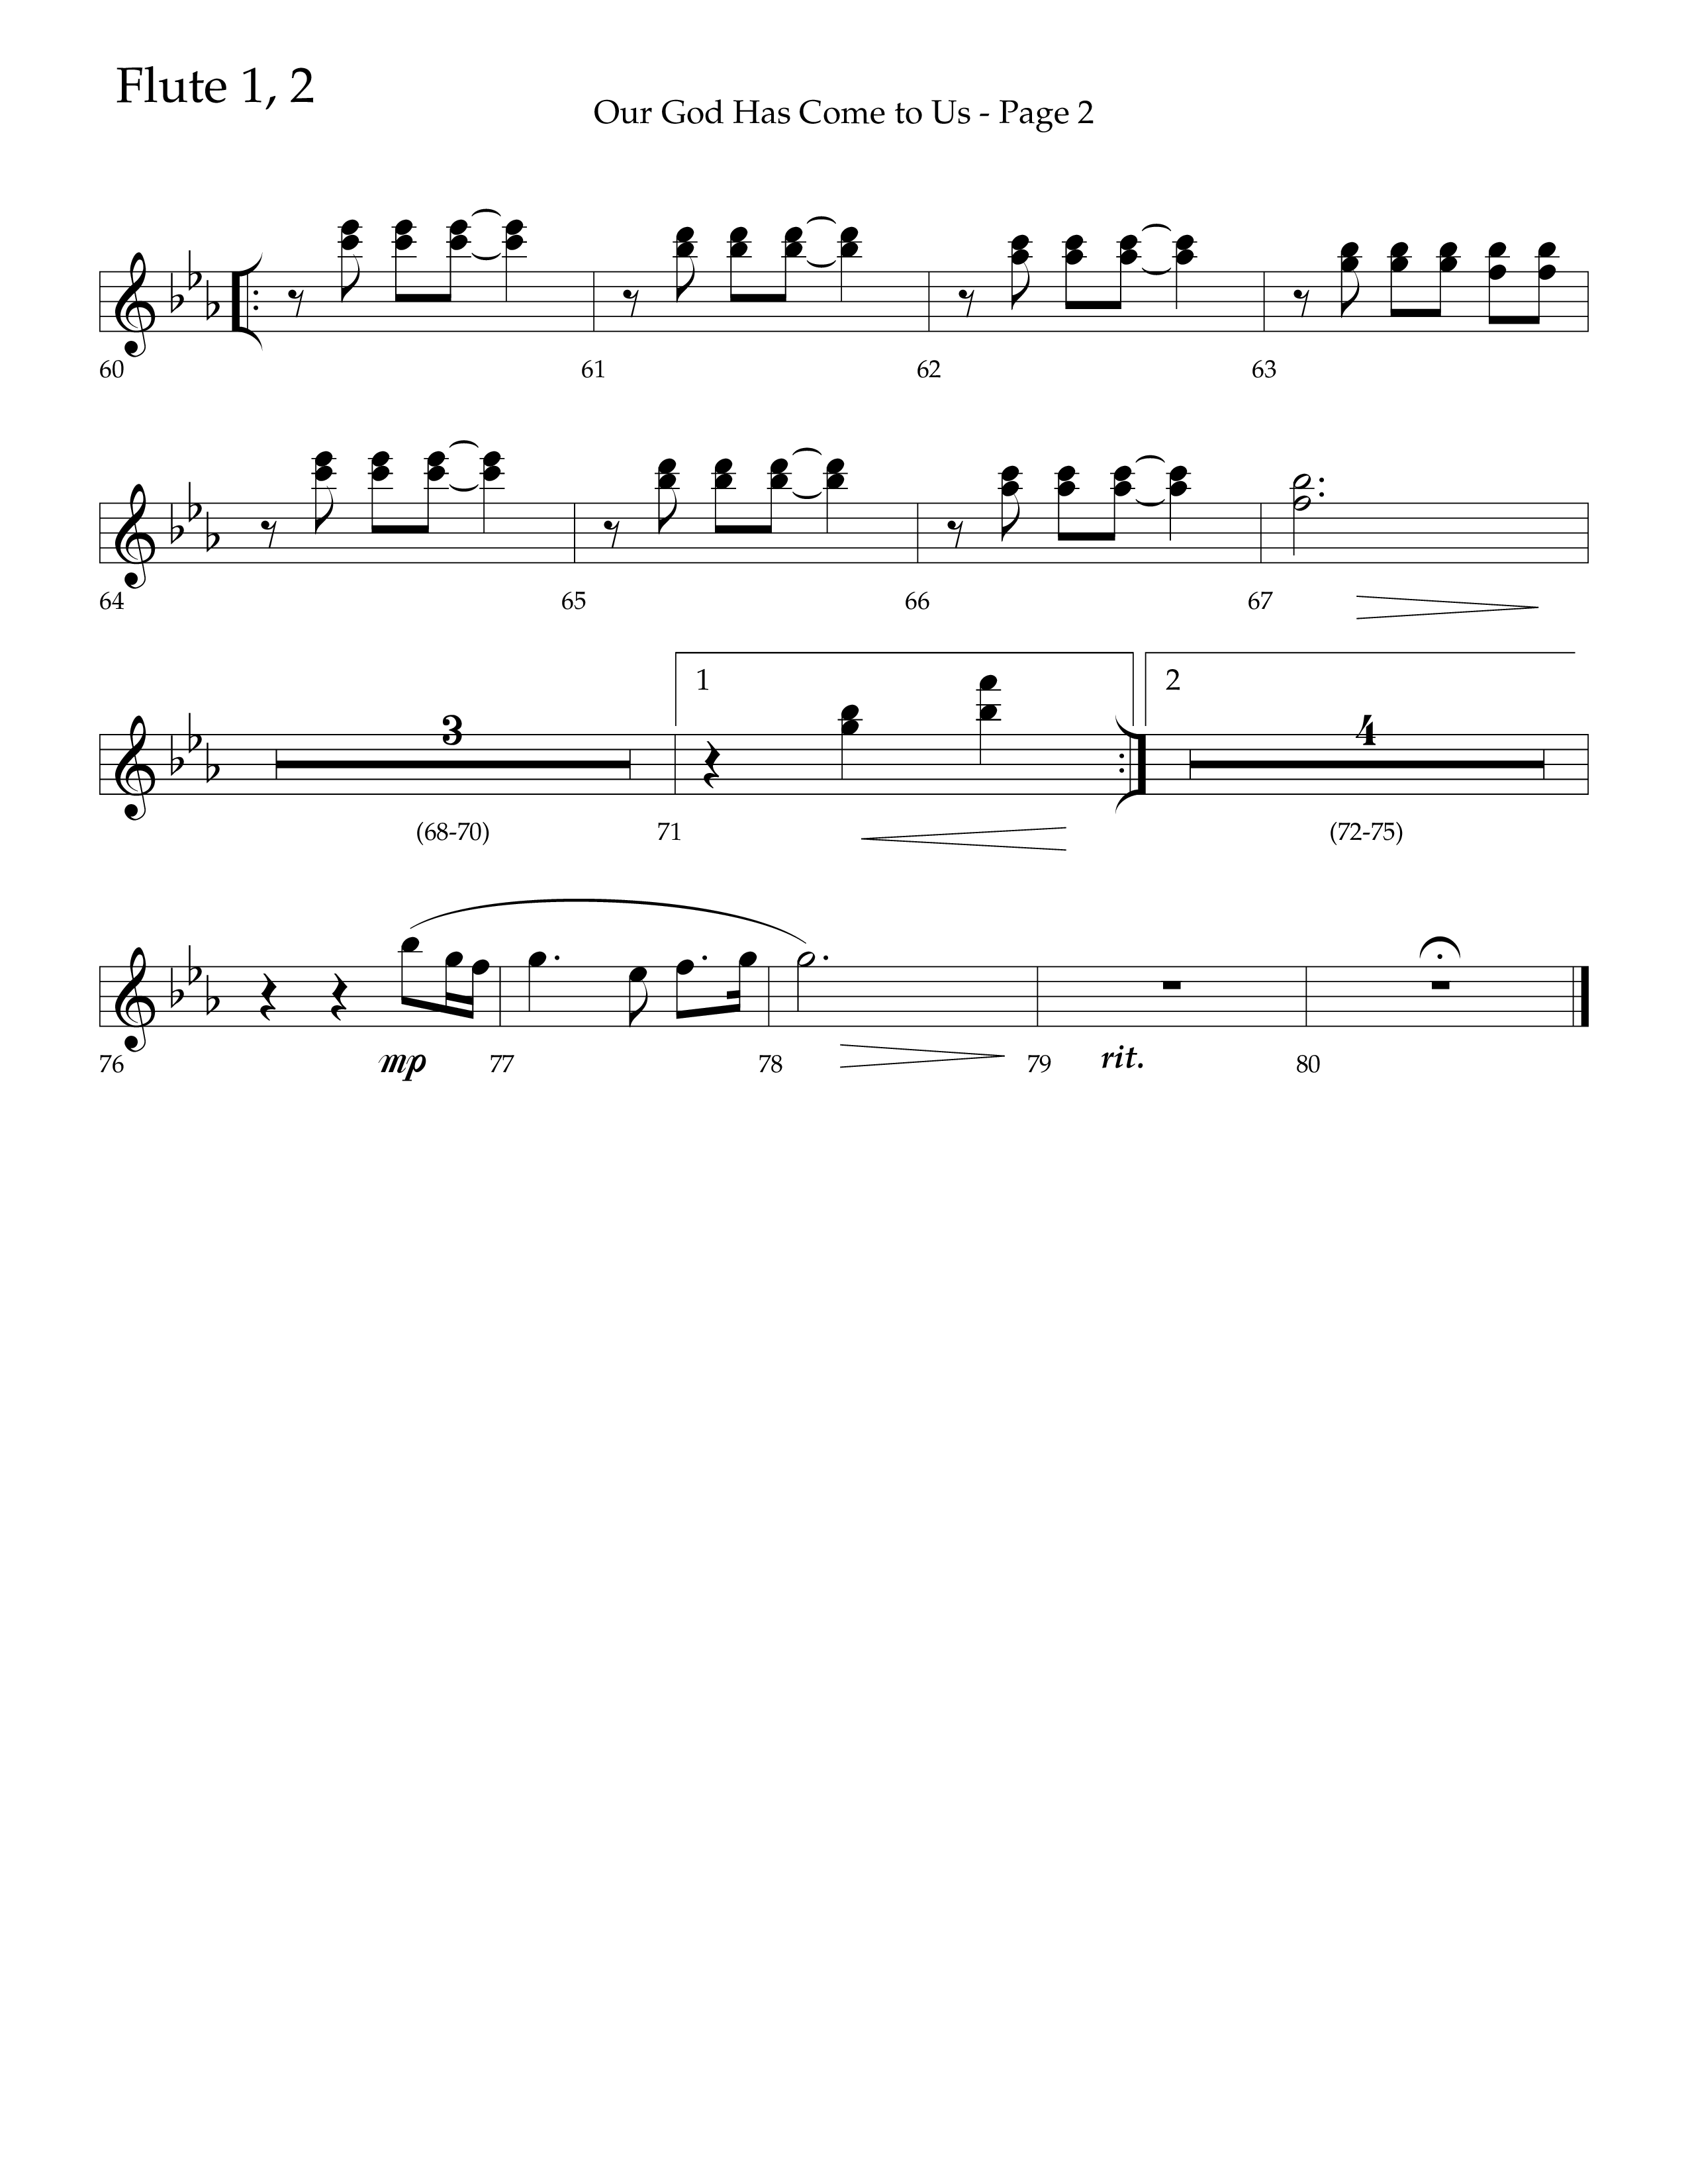 Our God Has Come To Us (Choral Anthem SATB) Flute 1/2 (Lifeway Choral / Arr. Camp Kirkland)